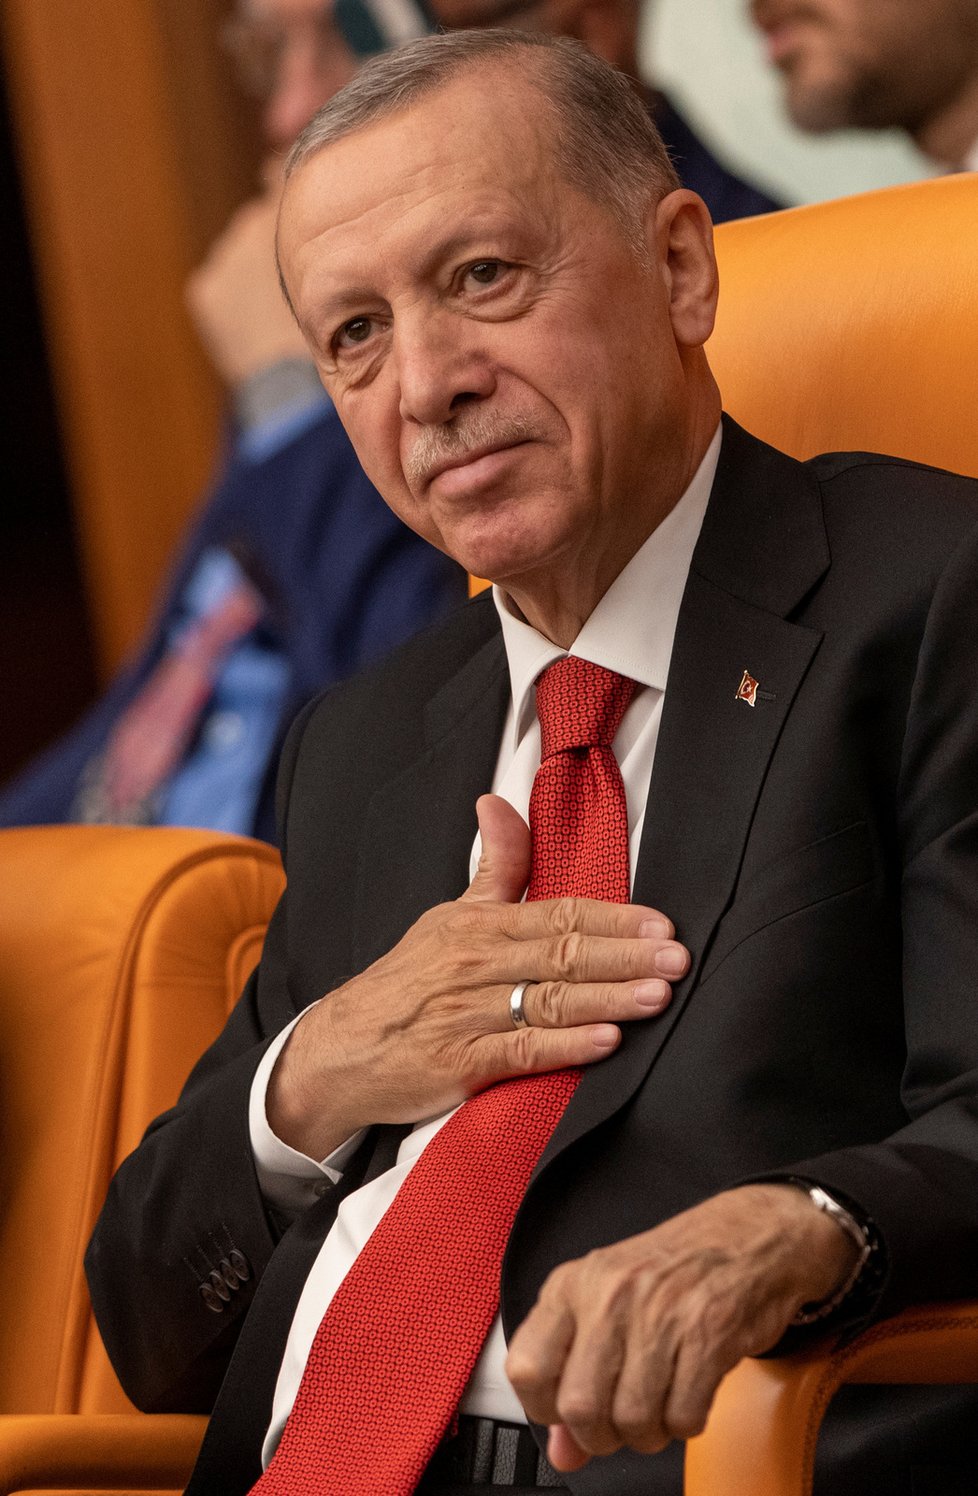 Turecký prezident Erdogan složil přísahu (3. 6. 2023).